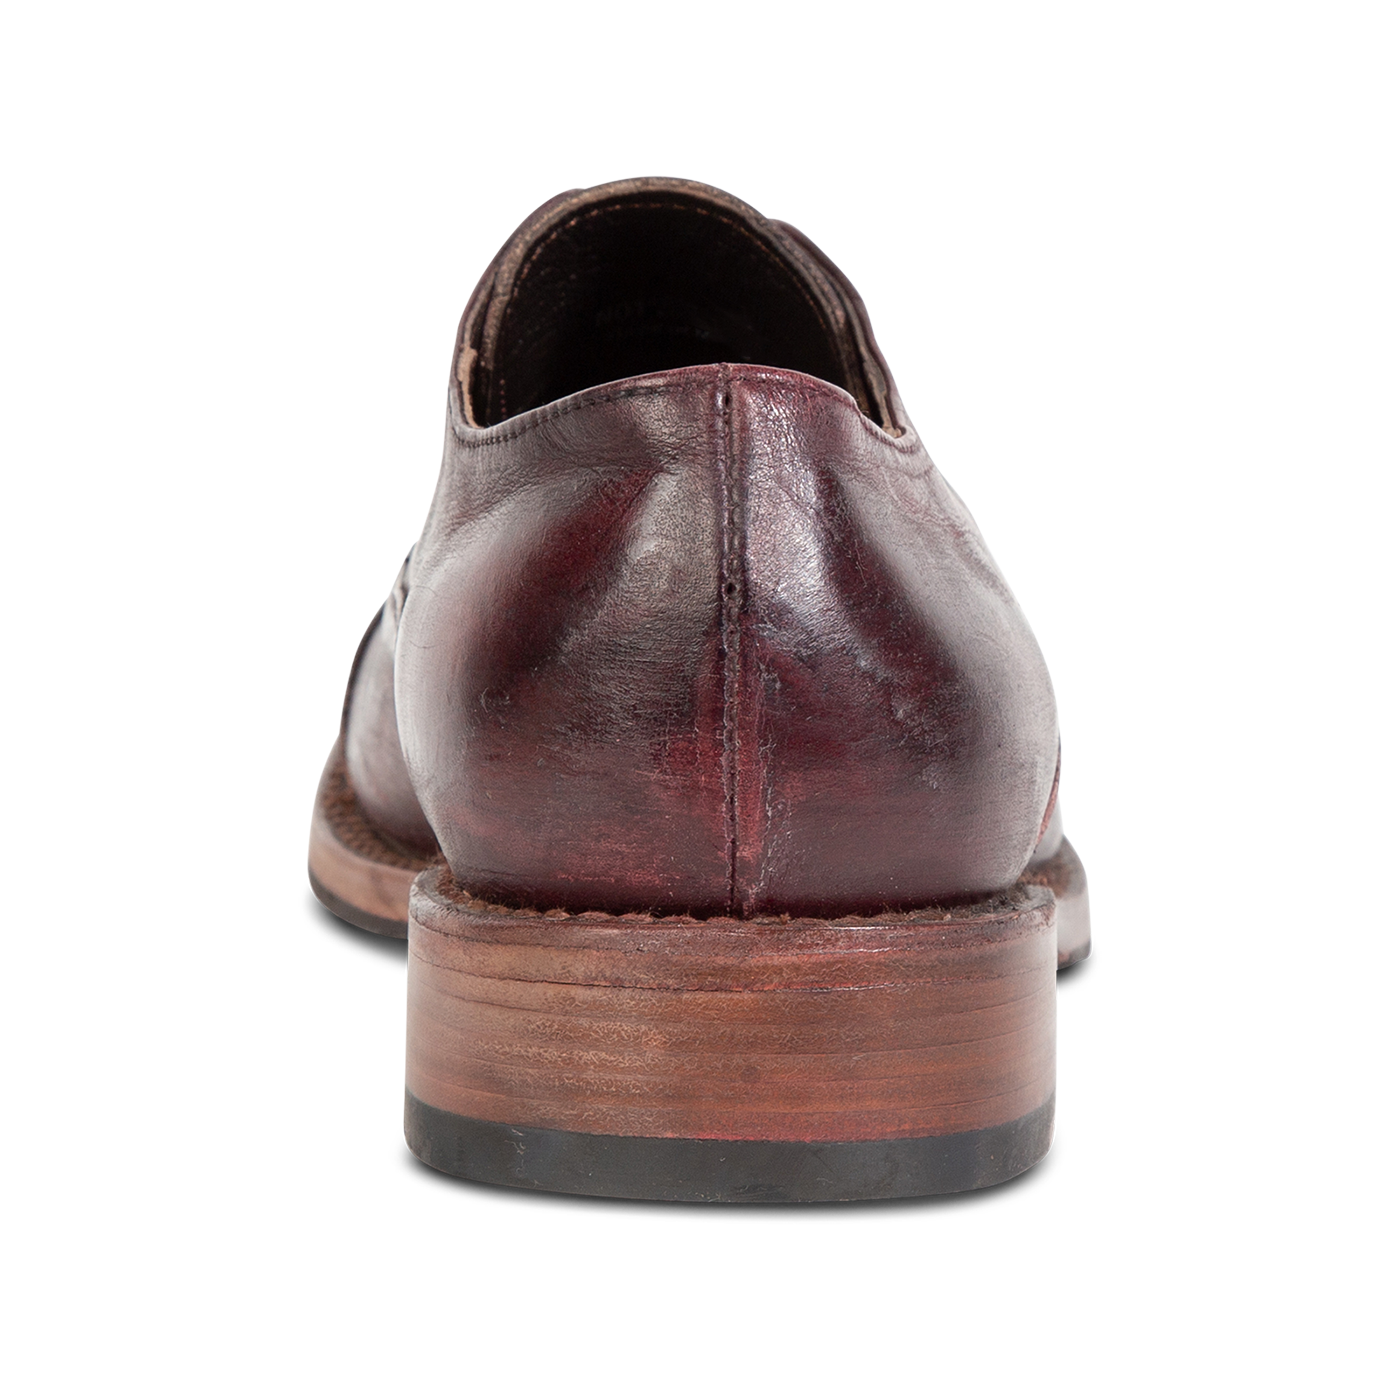 Back view showing low heel on FREEBIRD men's Detrick wine shoe